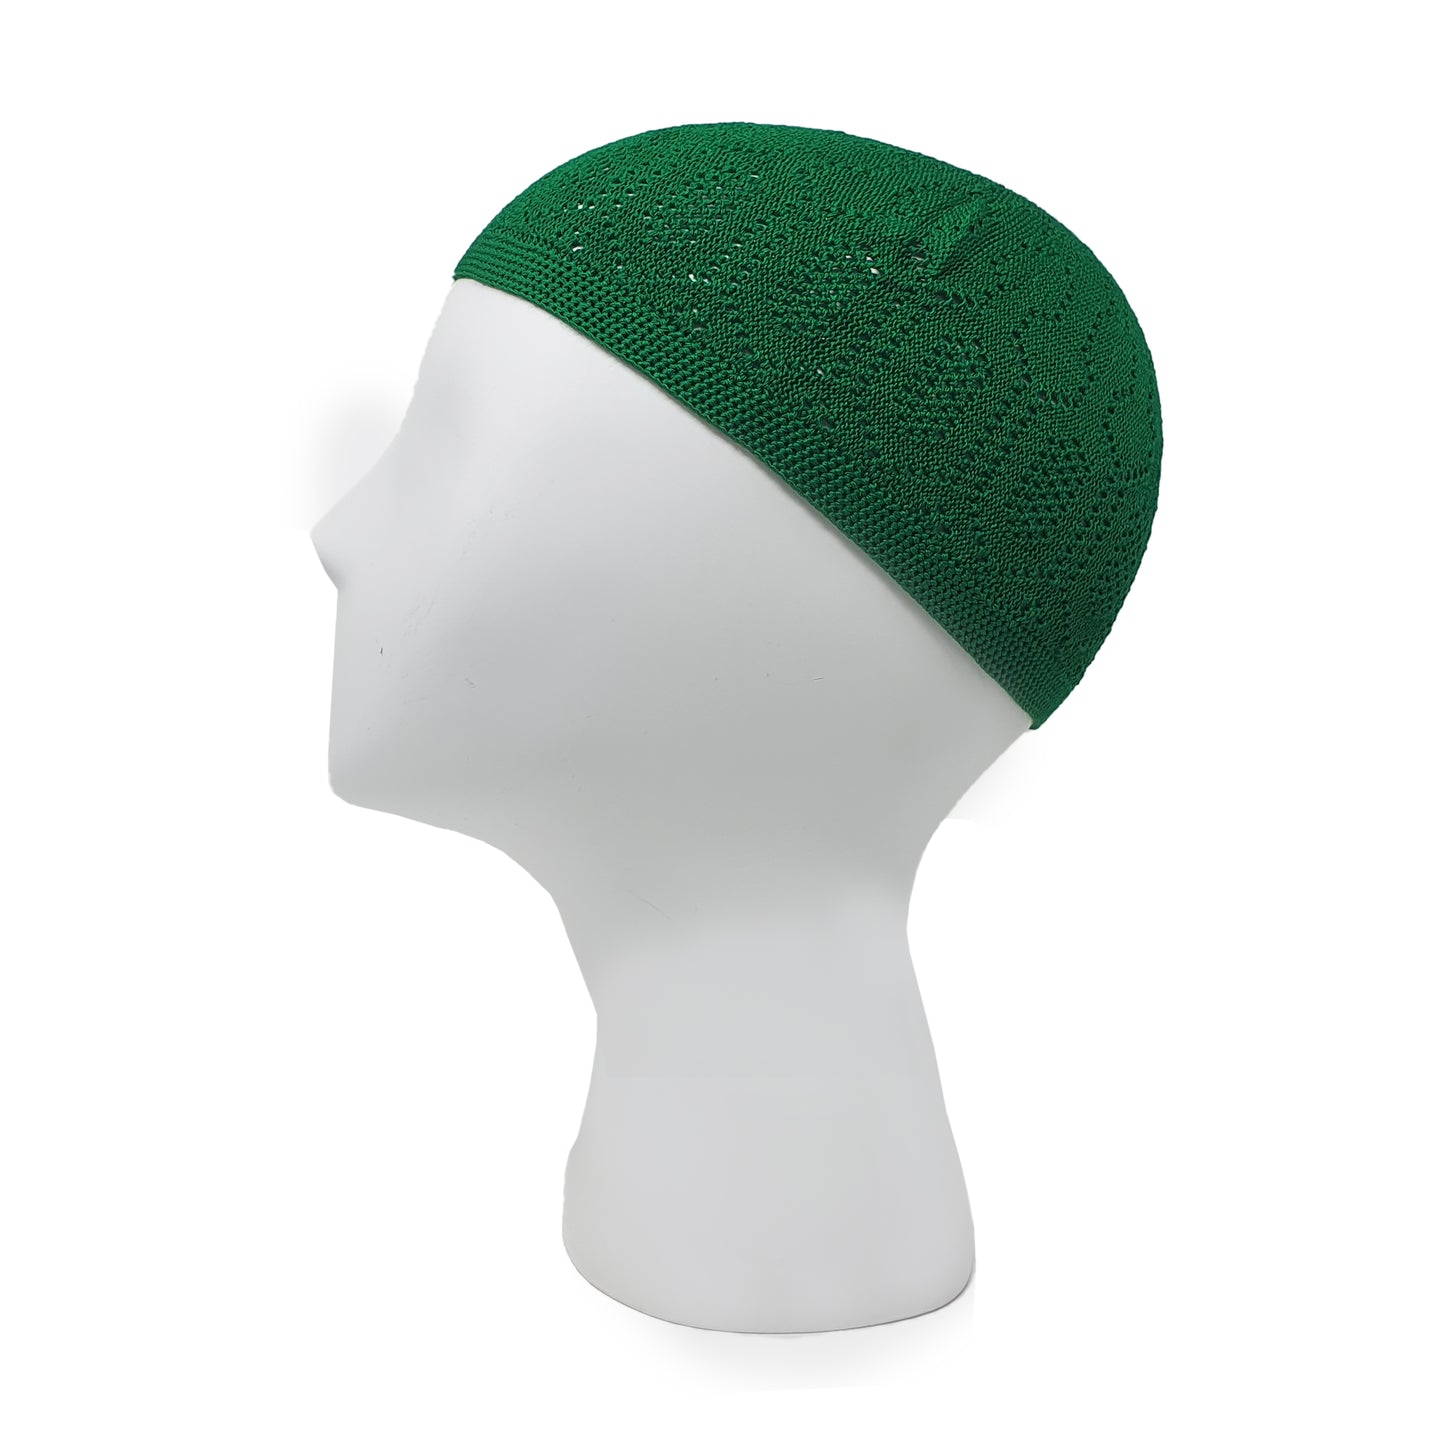 green Mosque hat